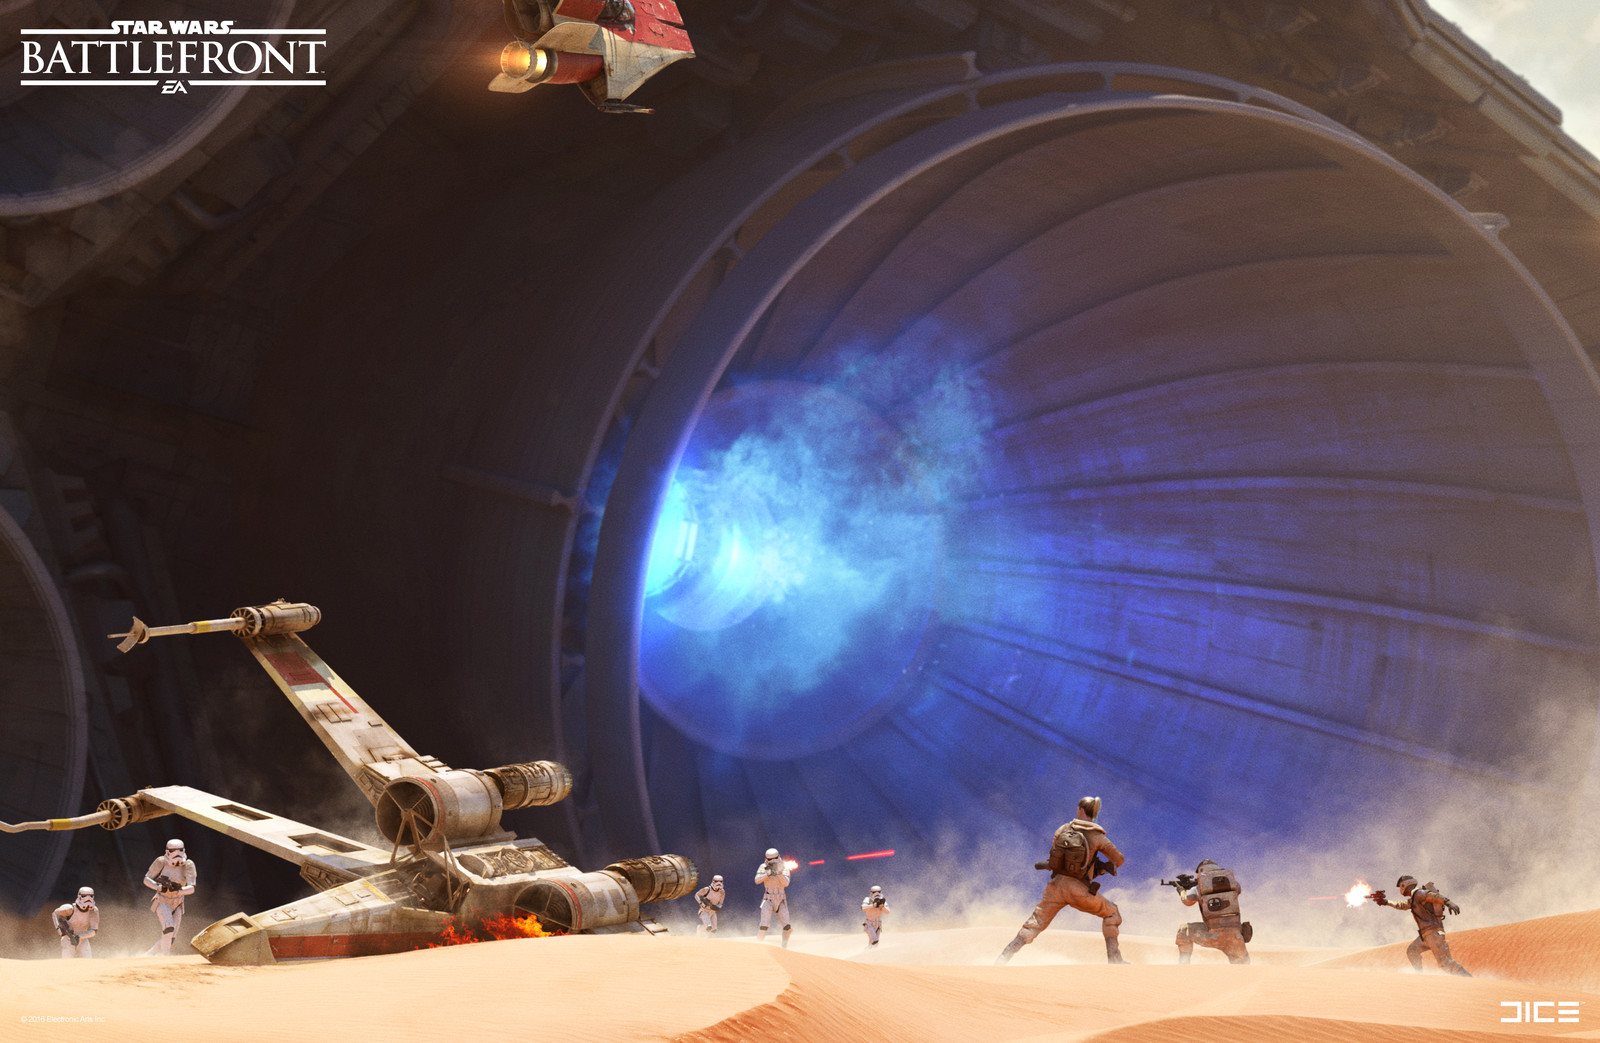 Jakku Key Art for the 2015 Star Wars Battlefront game (detail). (2015)